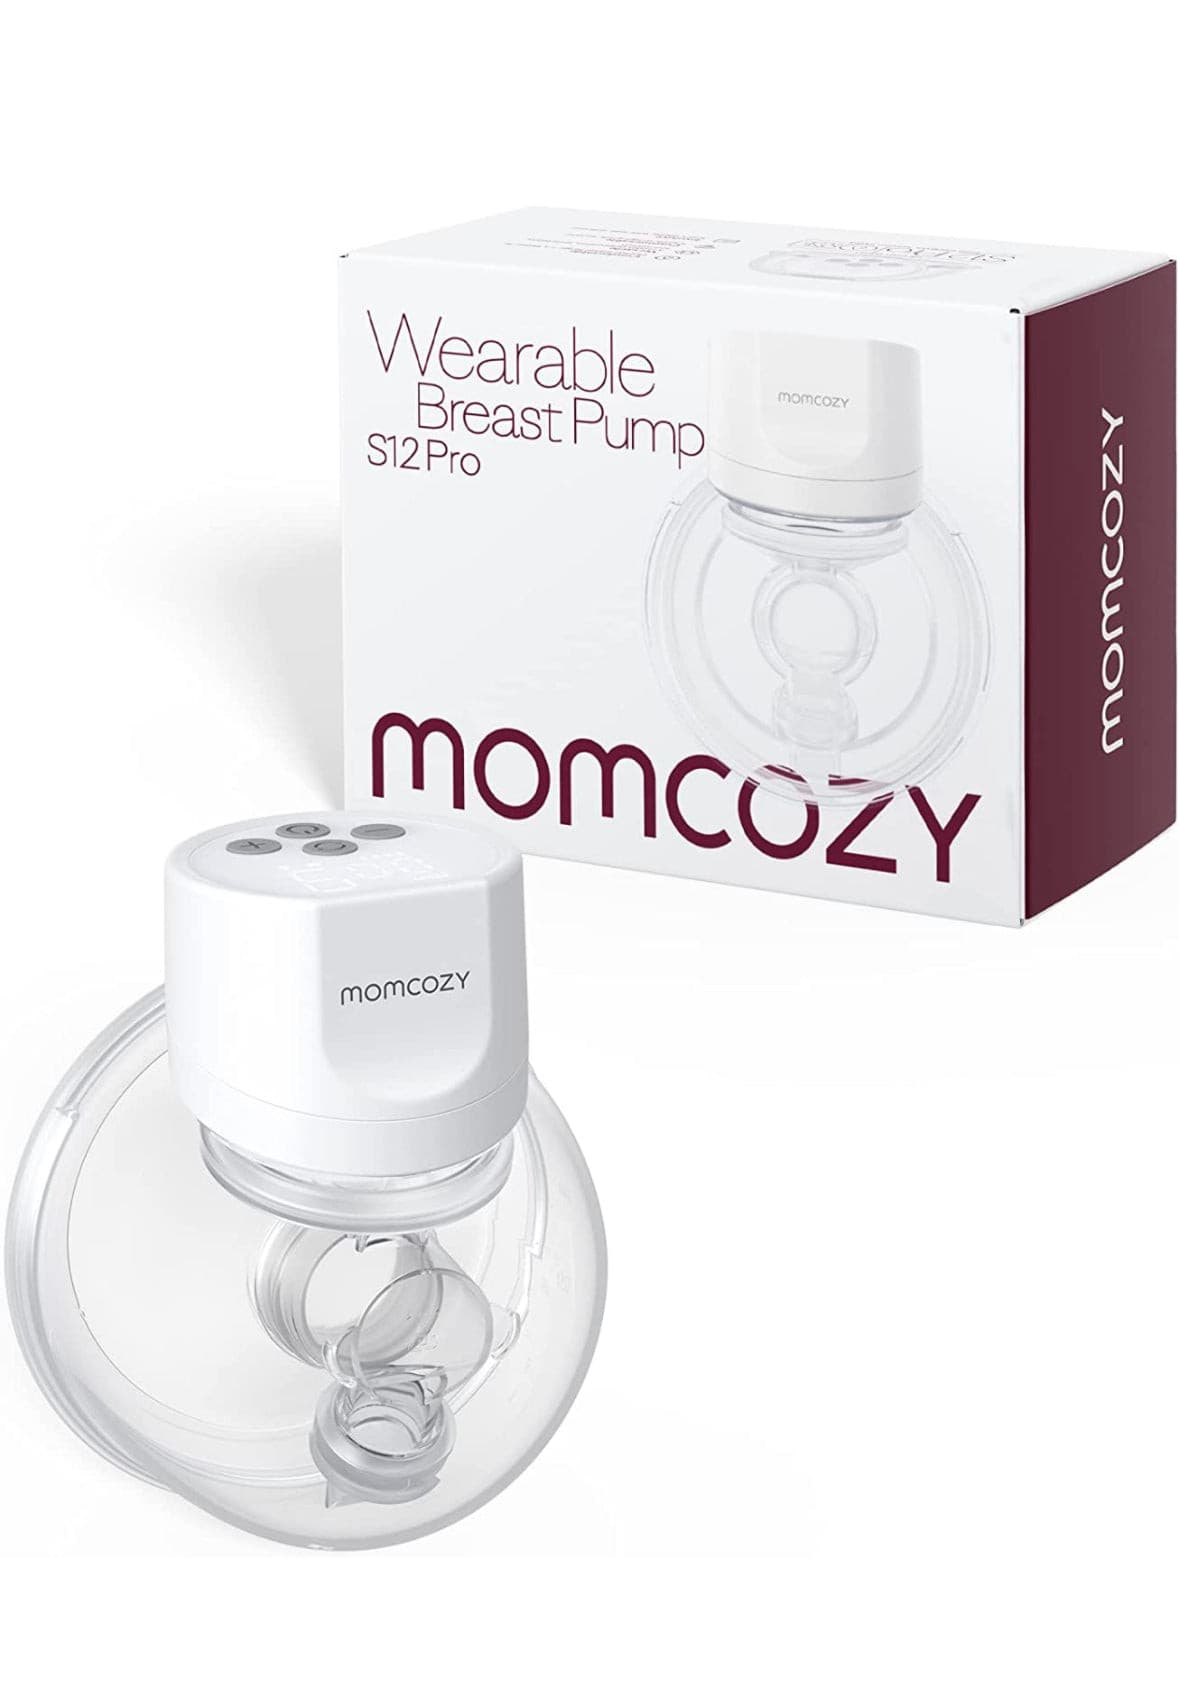 Momcozy Wearable Breast Pump S12 Pro.